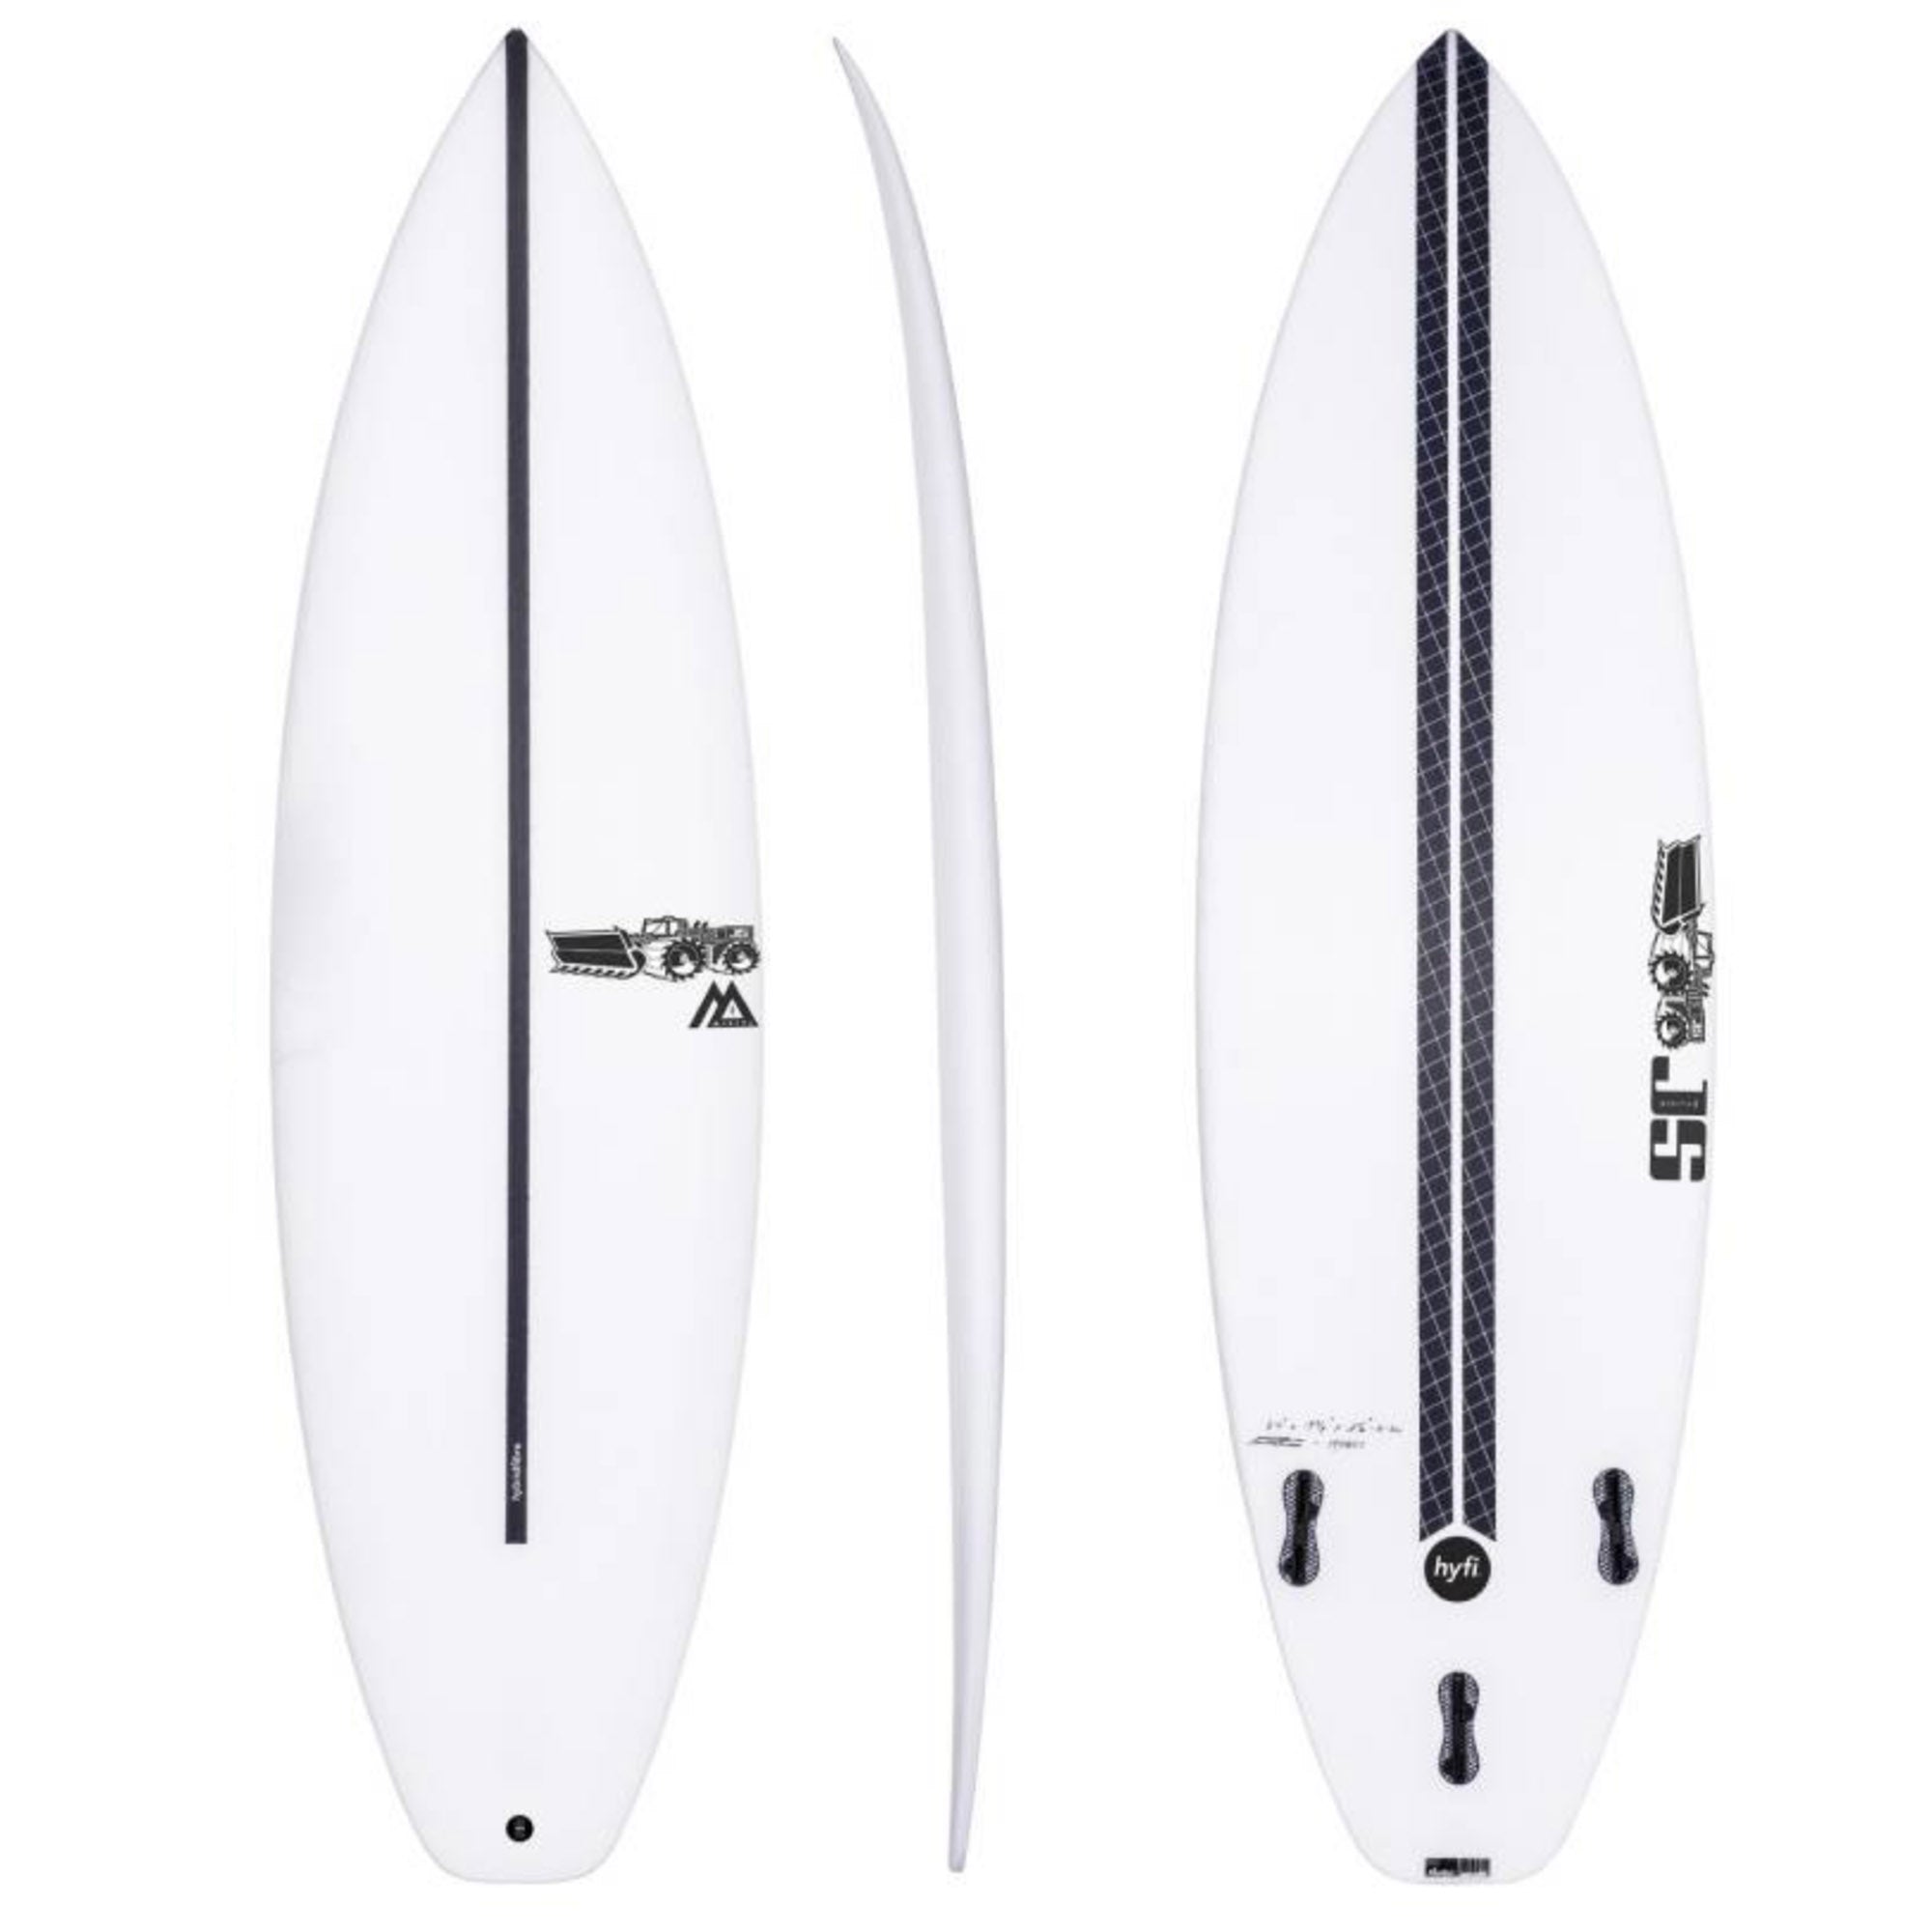 JS Monsta 8 Squash HYFI Surfboard - FCS II